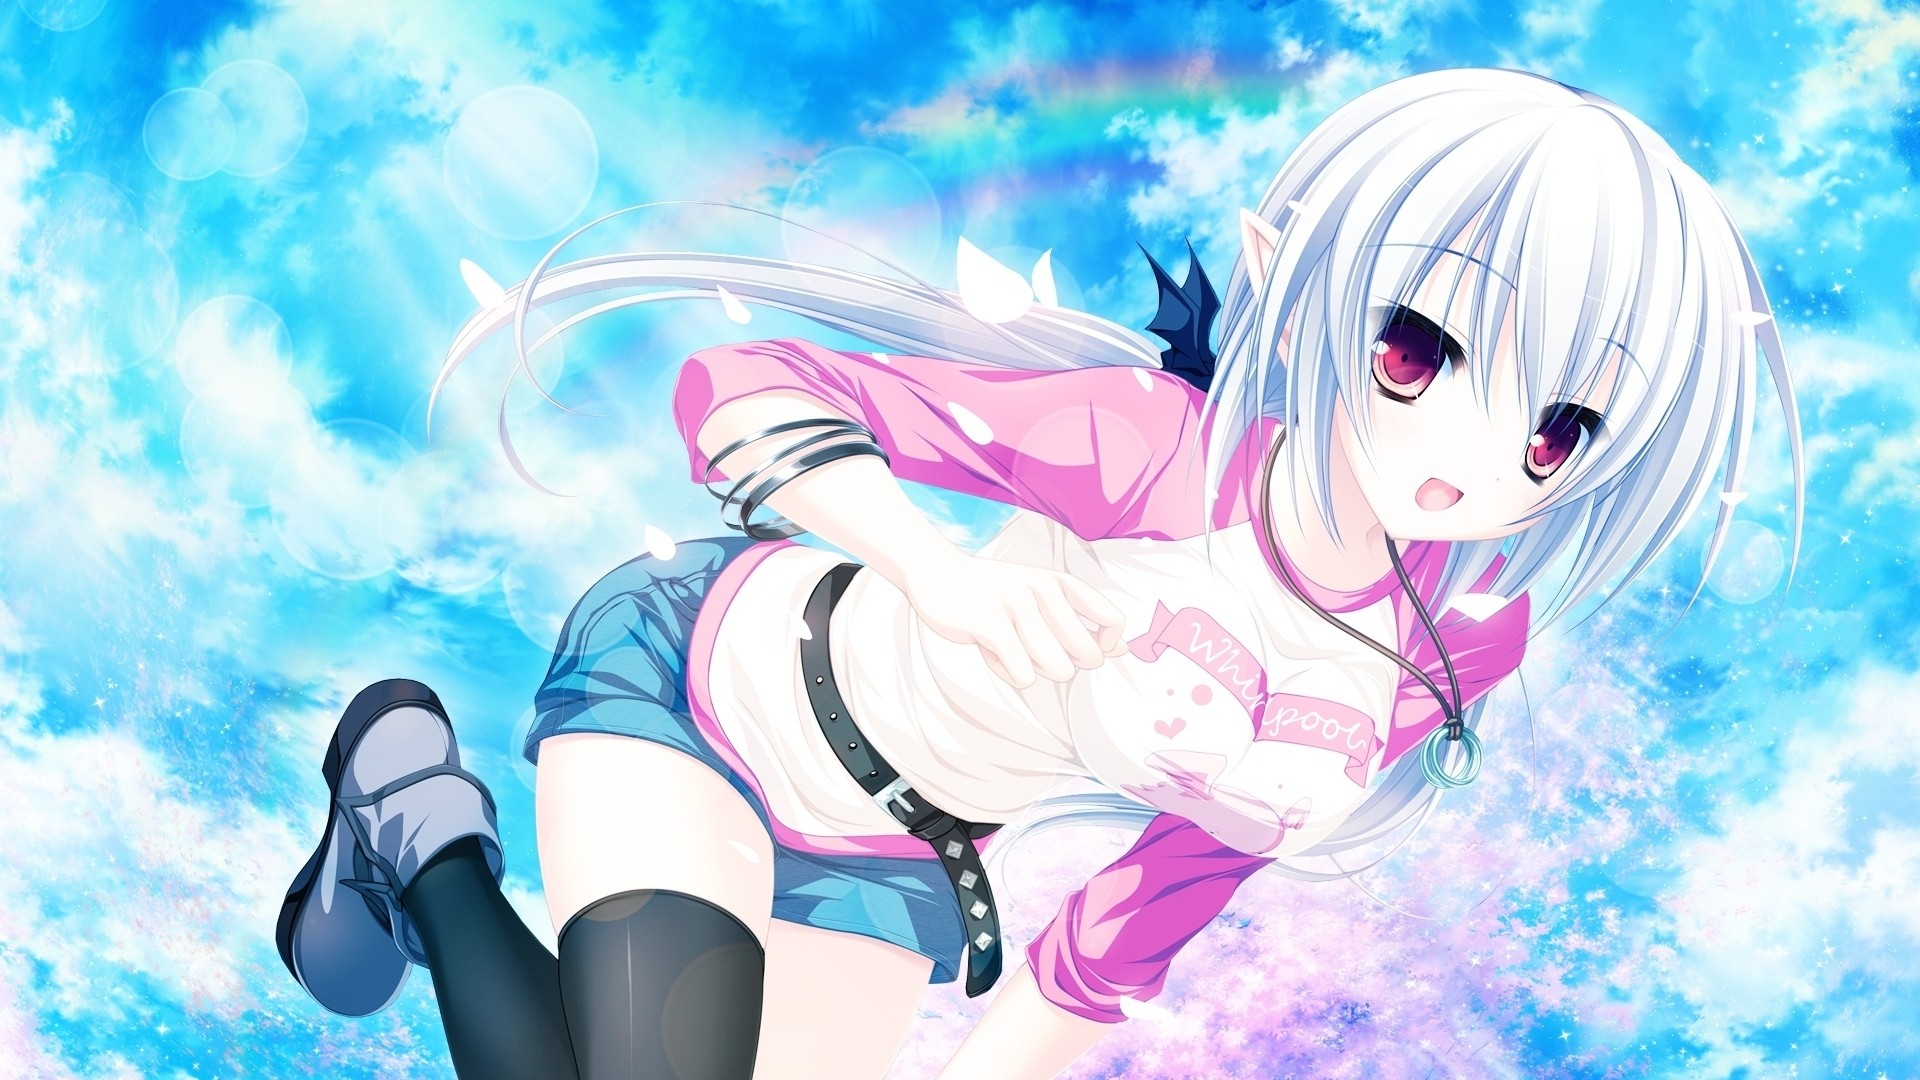 Anime Girl Wallpaper 69989 Hd Wallpaper Backgrounds Download